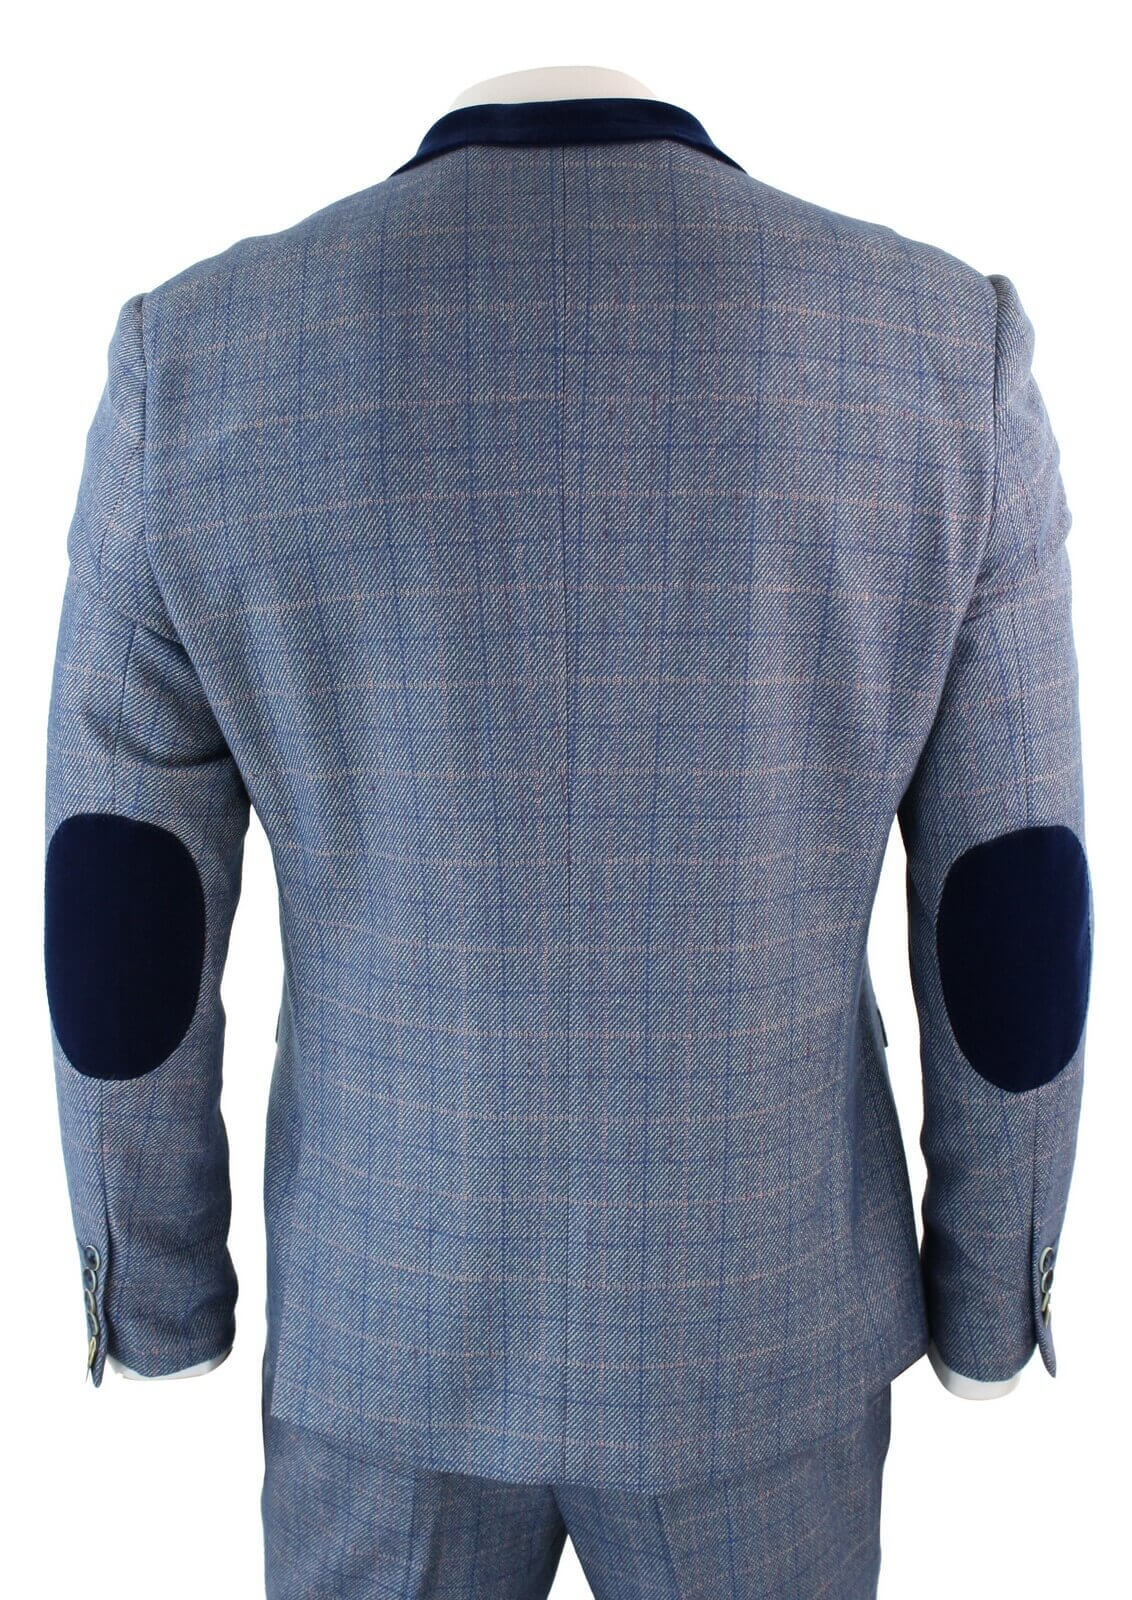 Jacket Hilton Blue Mens Marc Darcy Check Formal Tweed Blazer